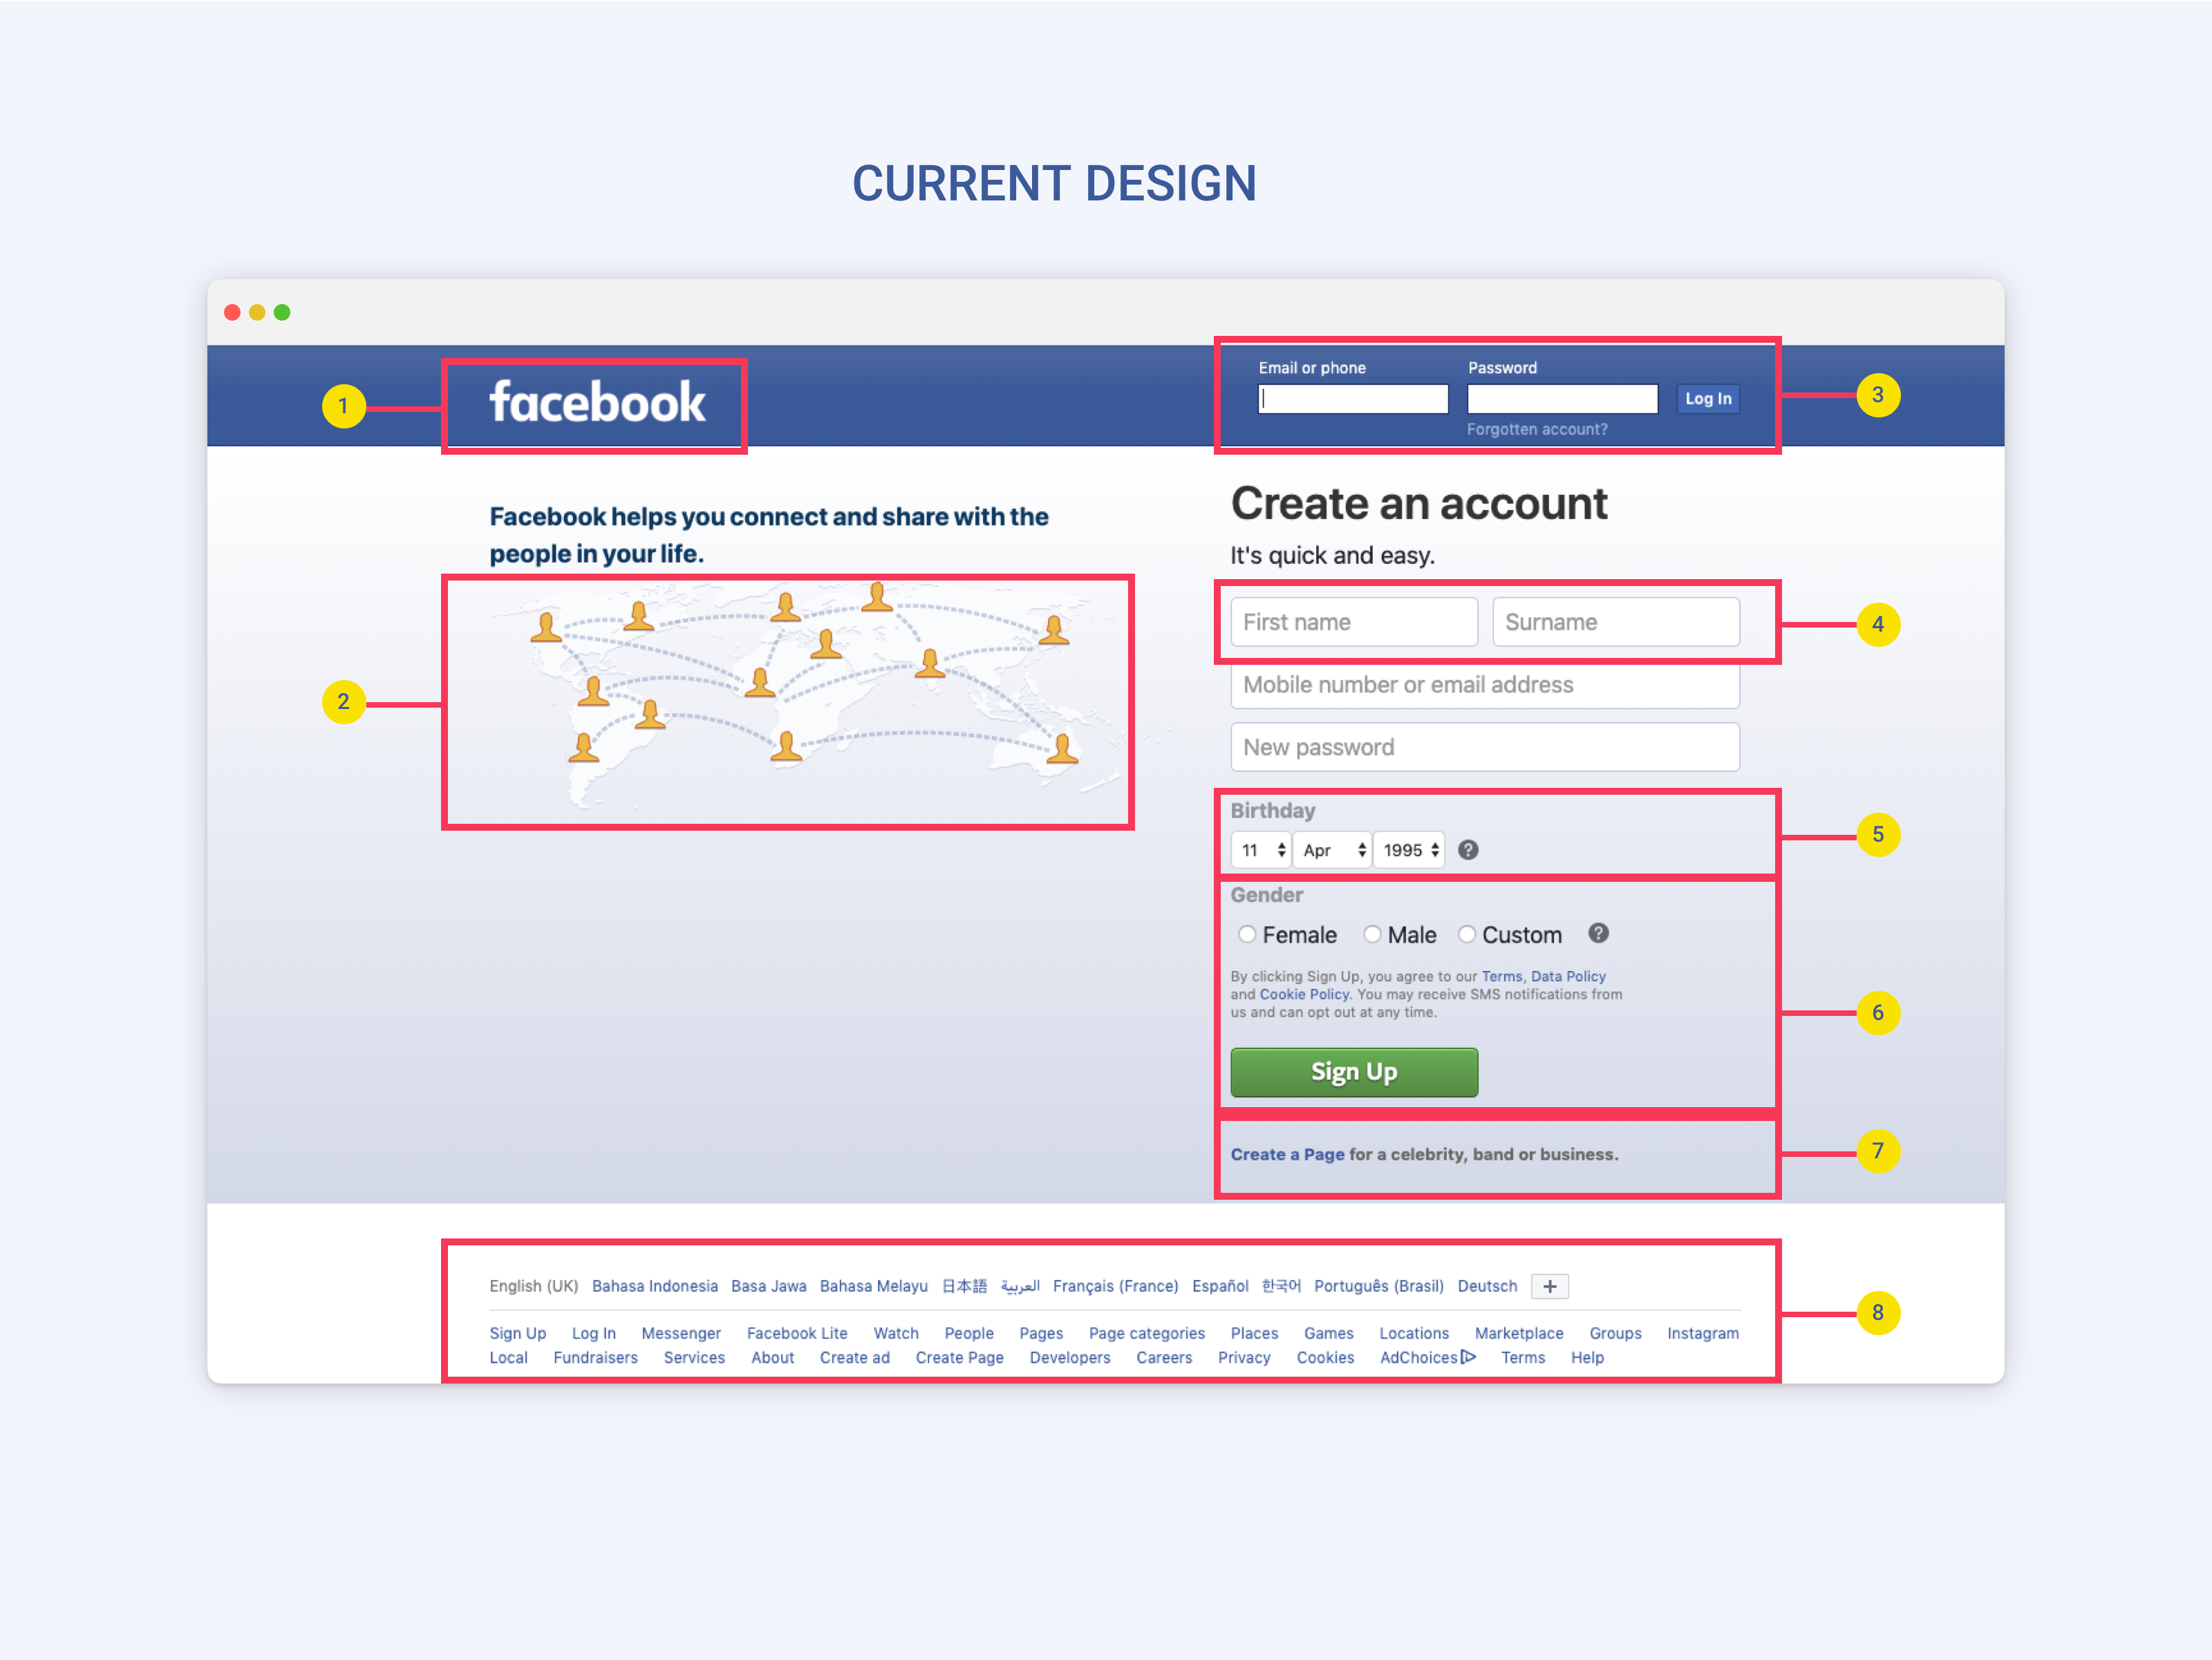 The current design of the Facebook website.